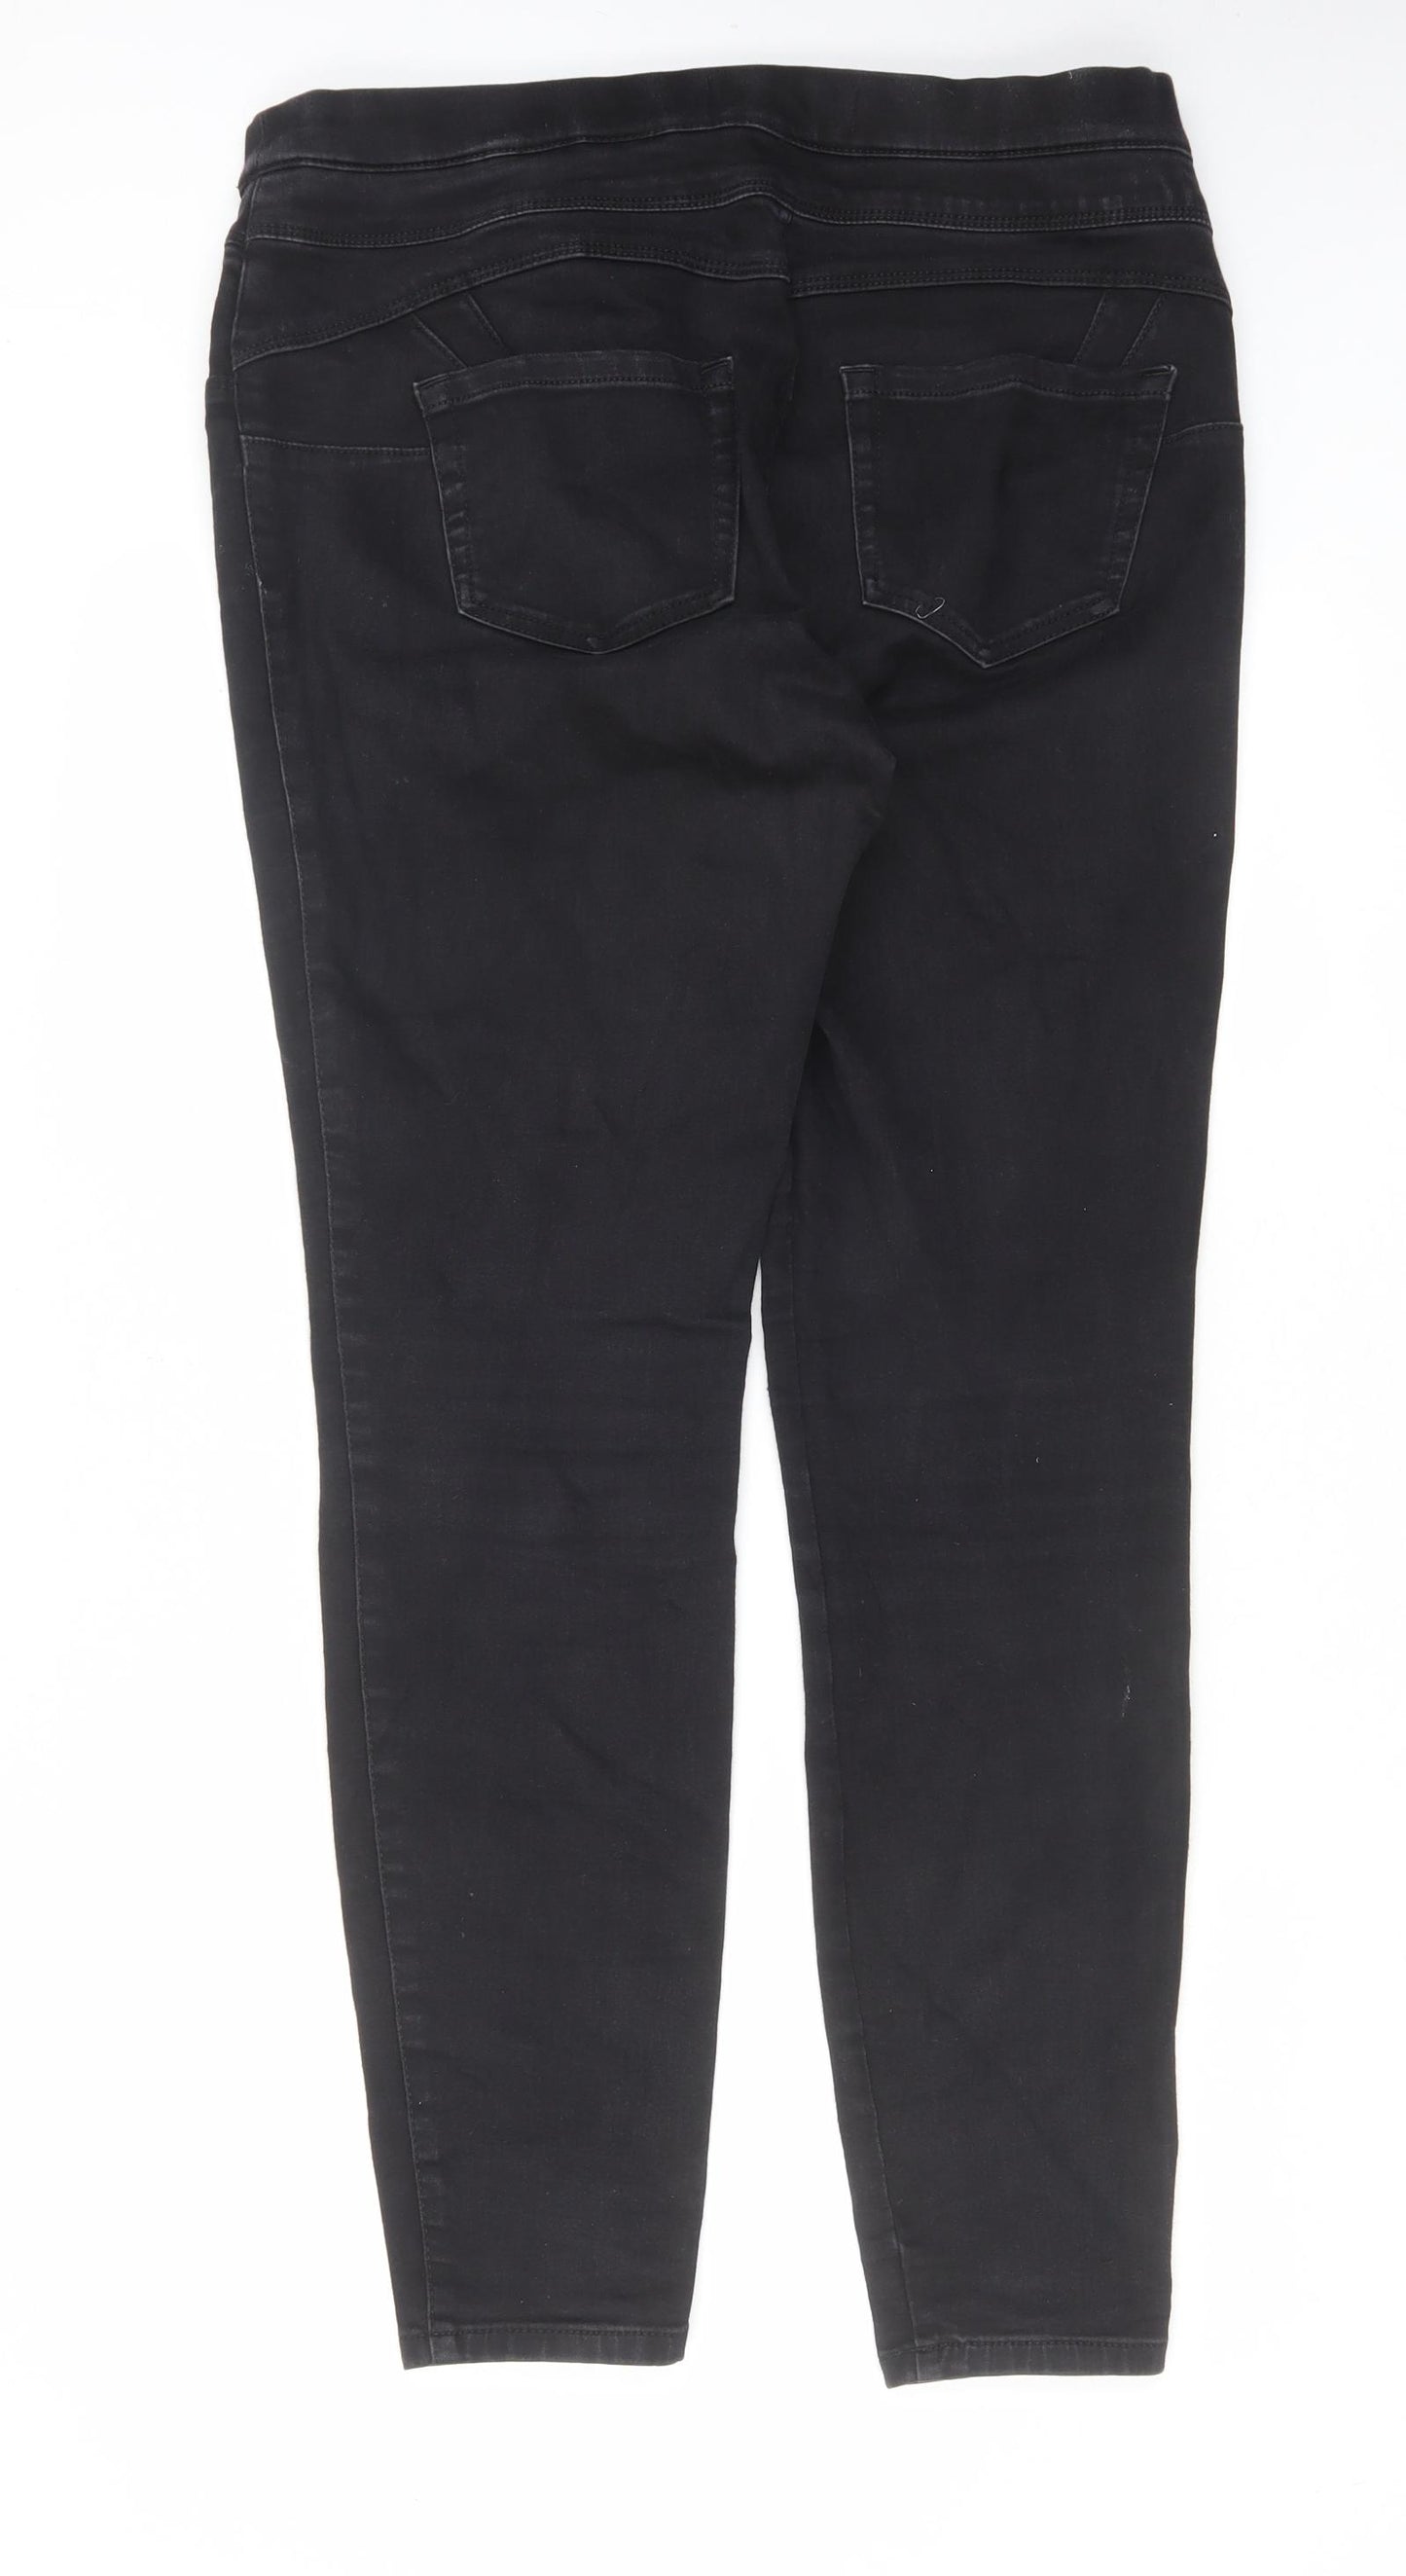 NEXT Womens Black Cotton Jegging Jeans Size 16 L31 in Regular Zip